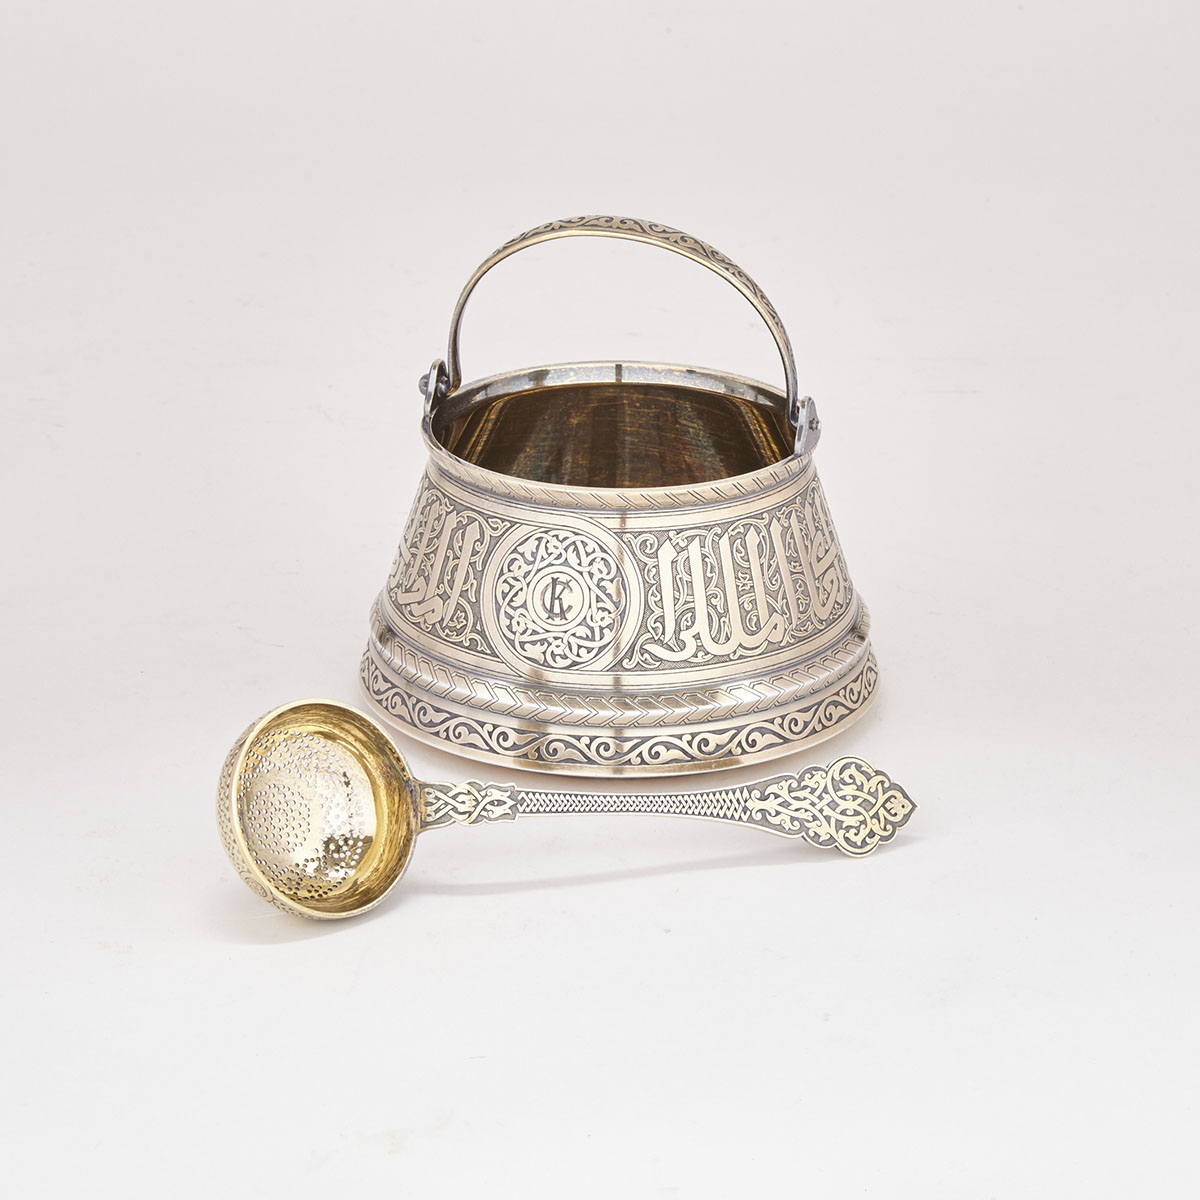 Russian Silver-Gilt Sugar Basket and Sifting Ladle, Pavel Sazikov, St. Petersburg, 1885